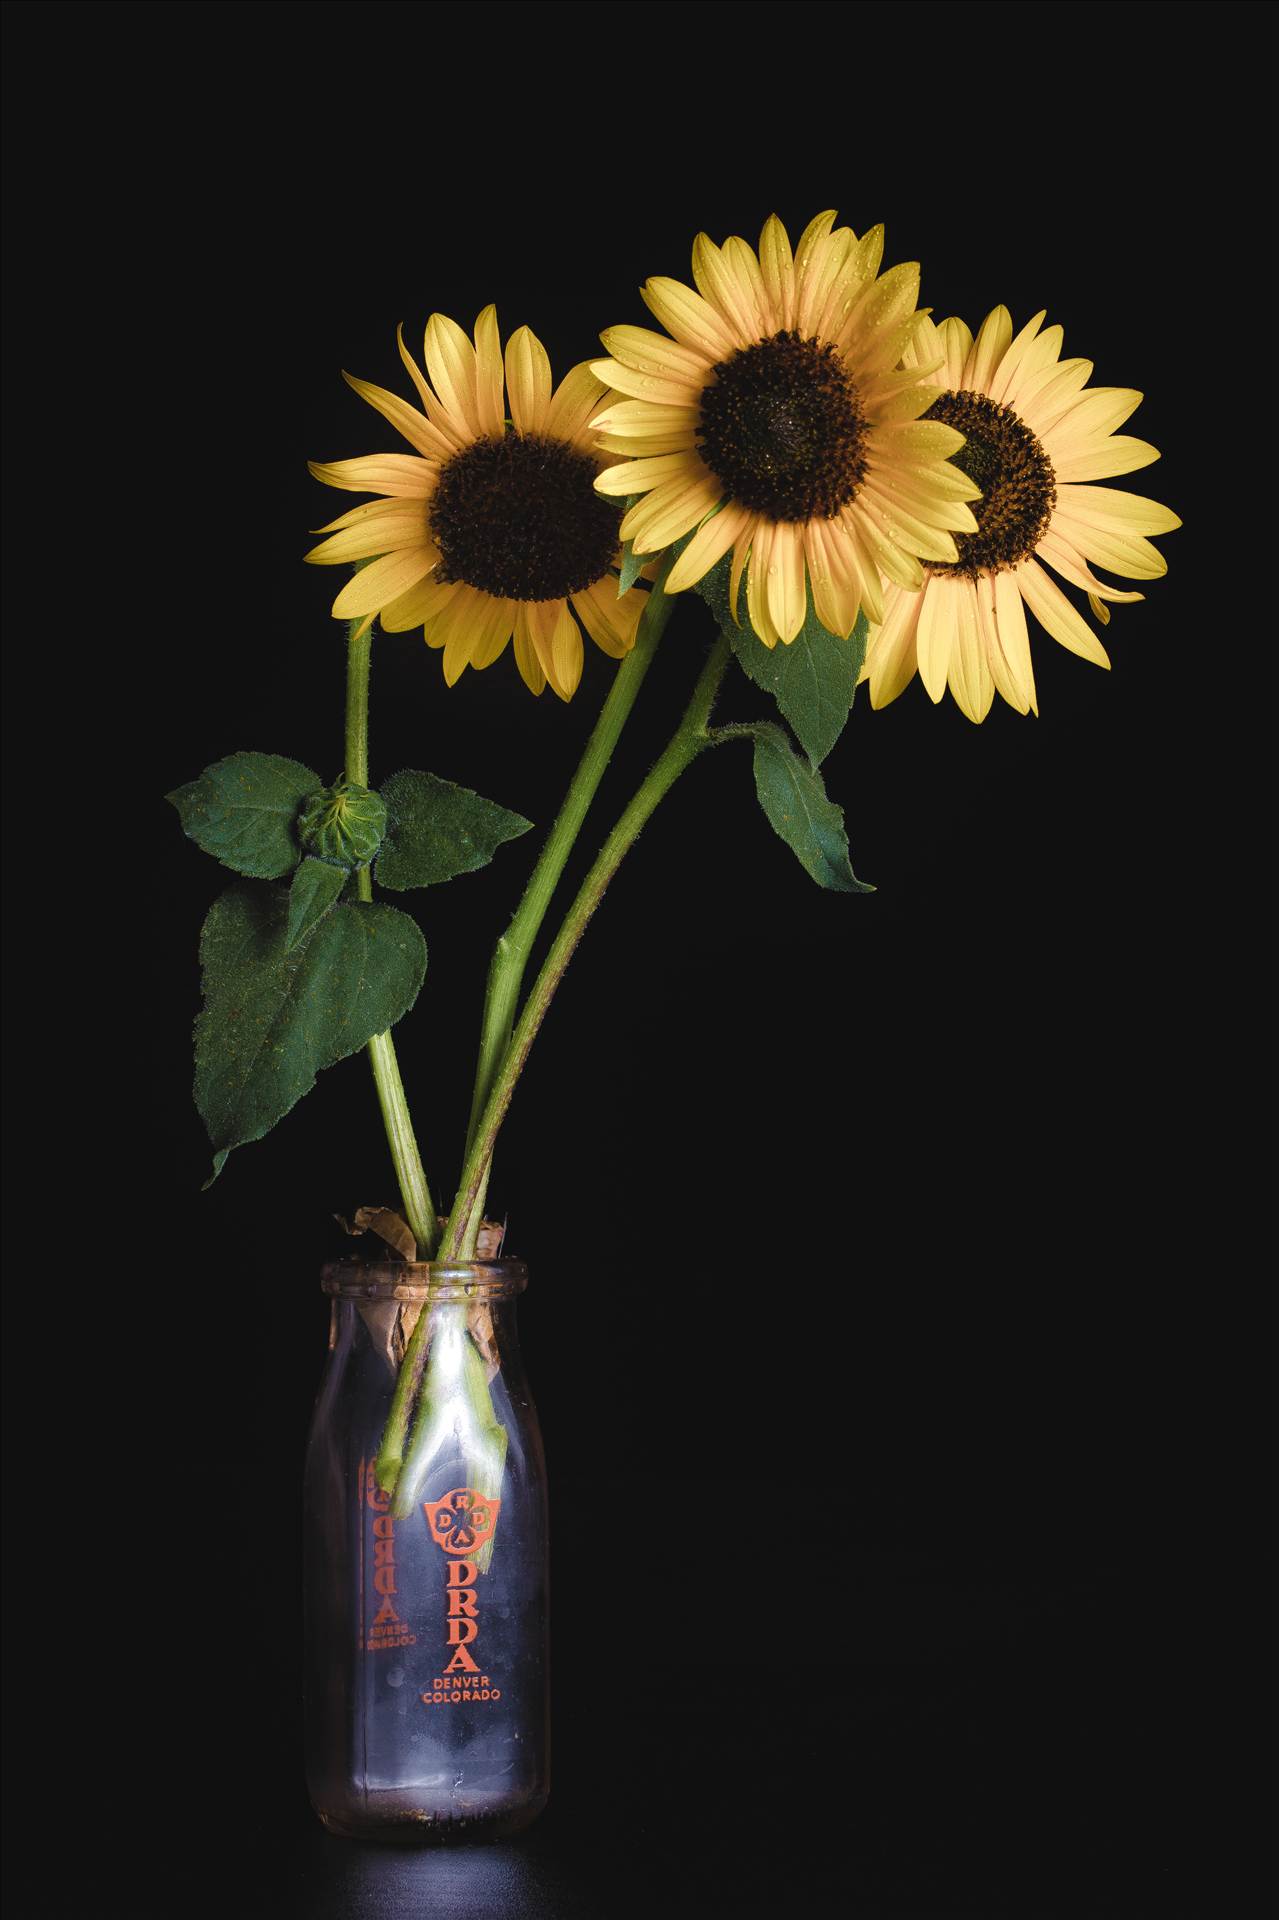 Backyard Sunflowers III - Fresh sunflowers, from Denver, Colorado. by Scott Smith Photos